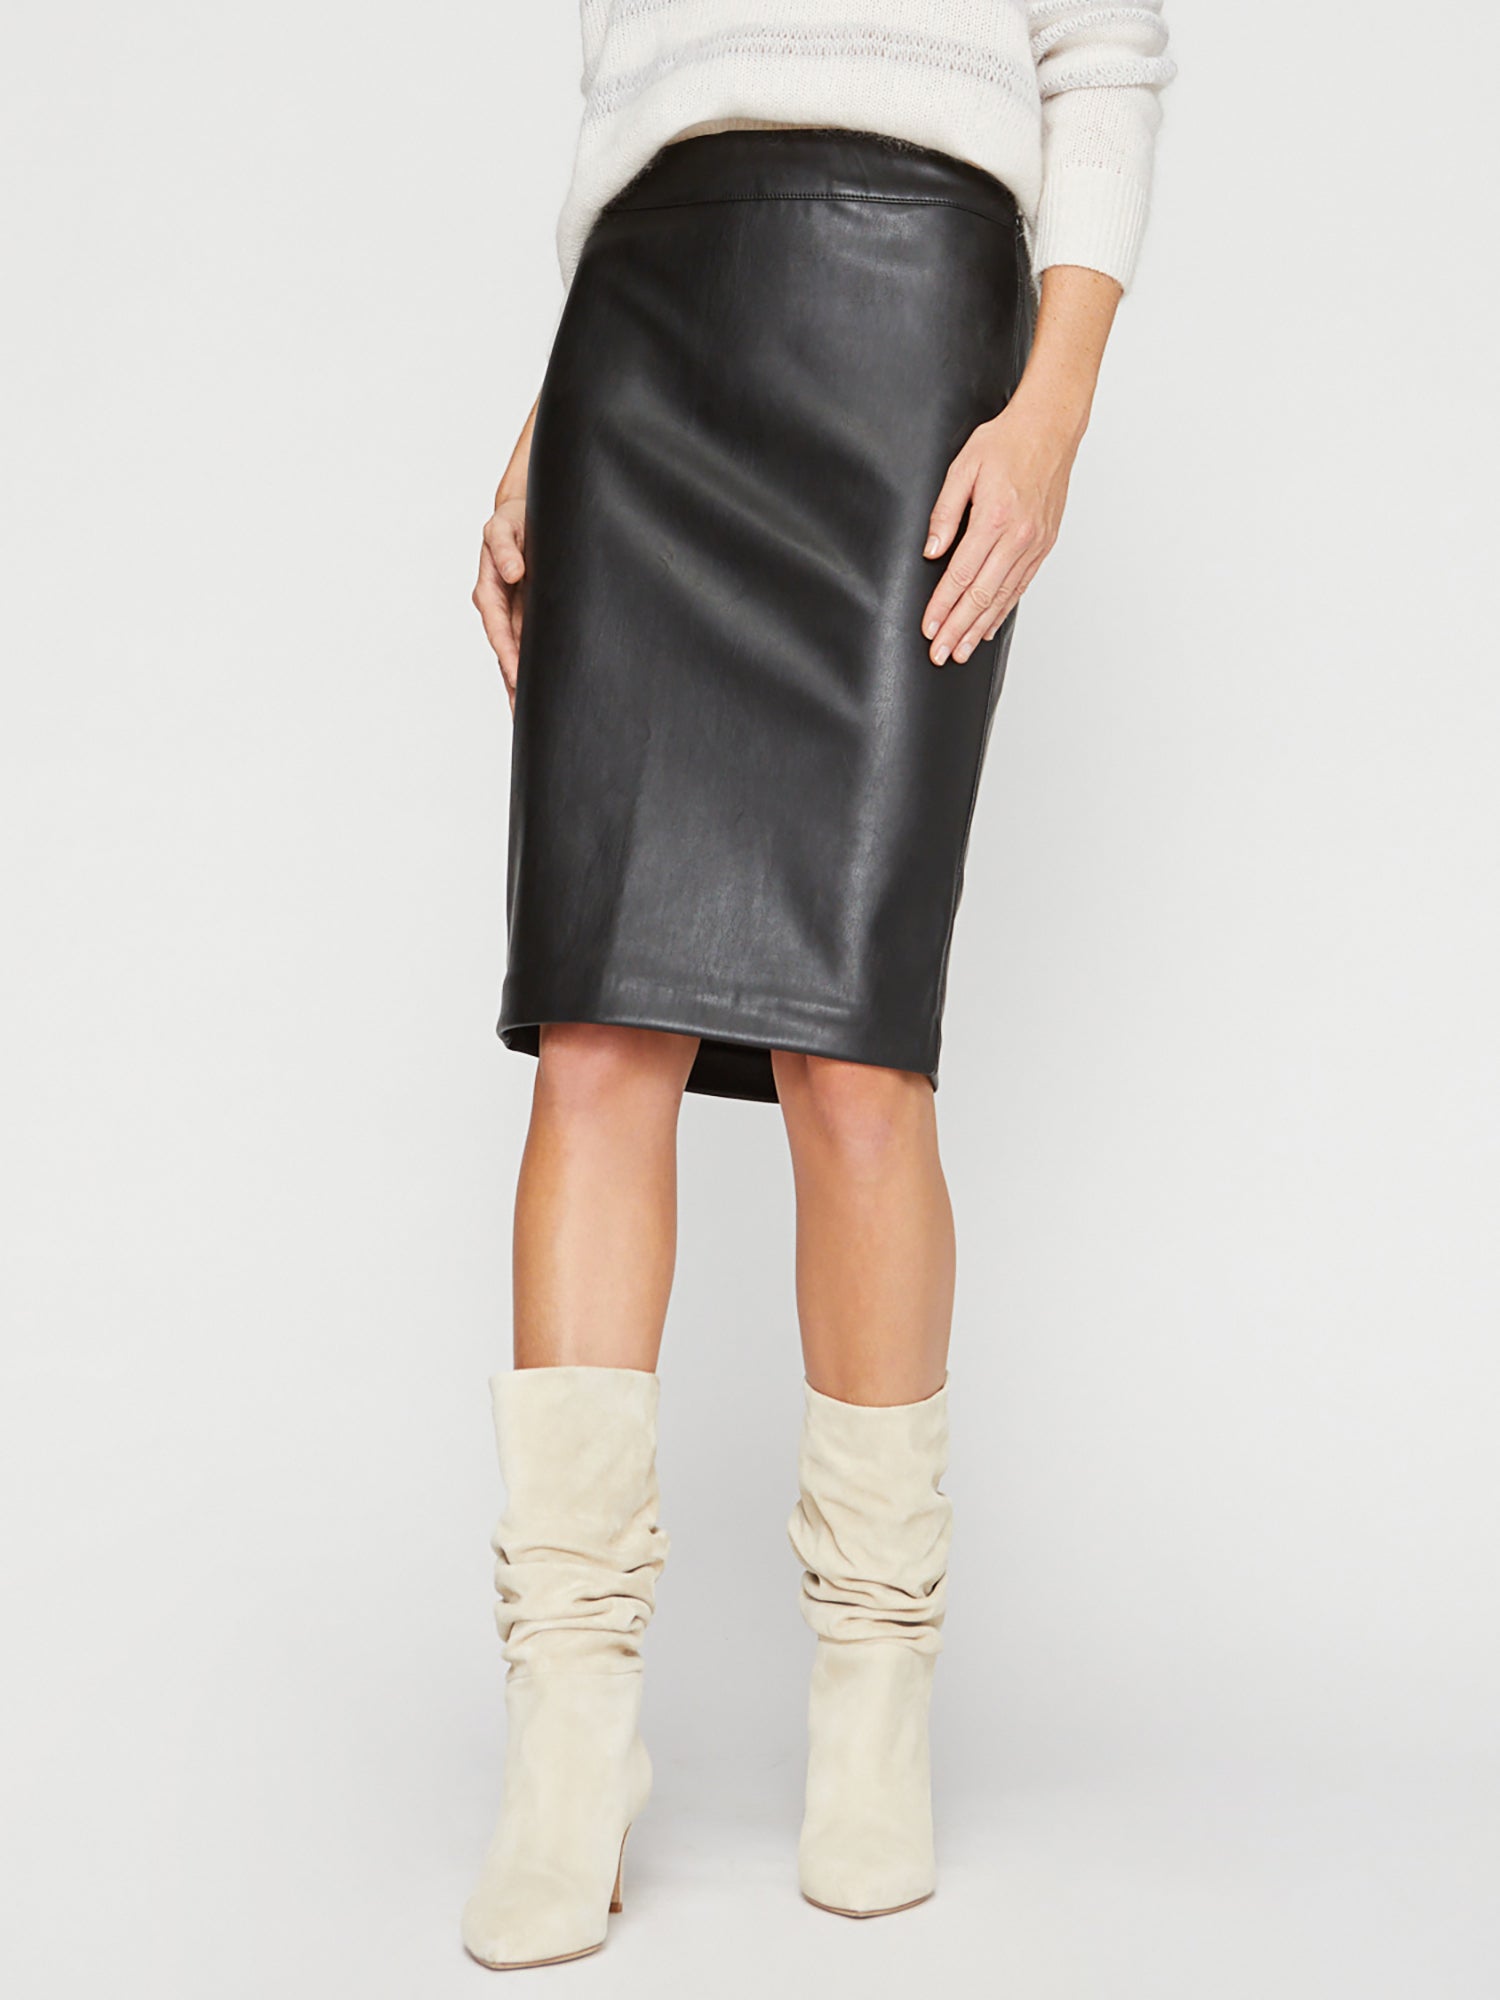 Drew black vegan leather knee-length pencil skirt front view